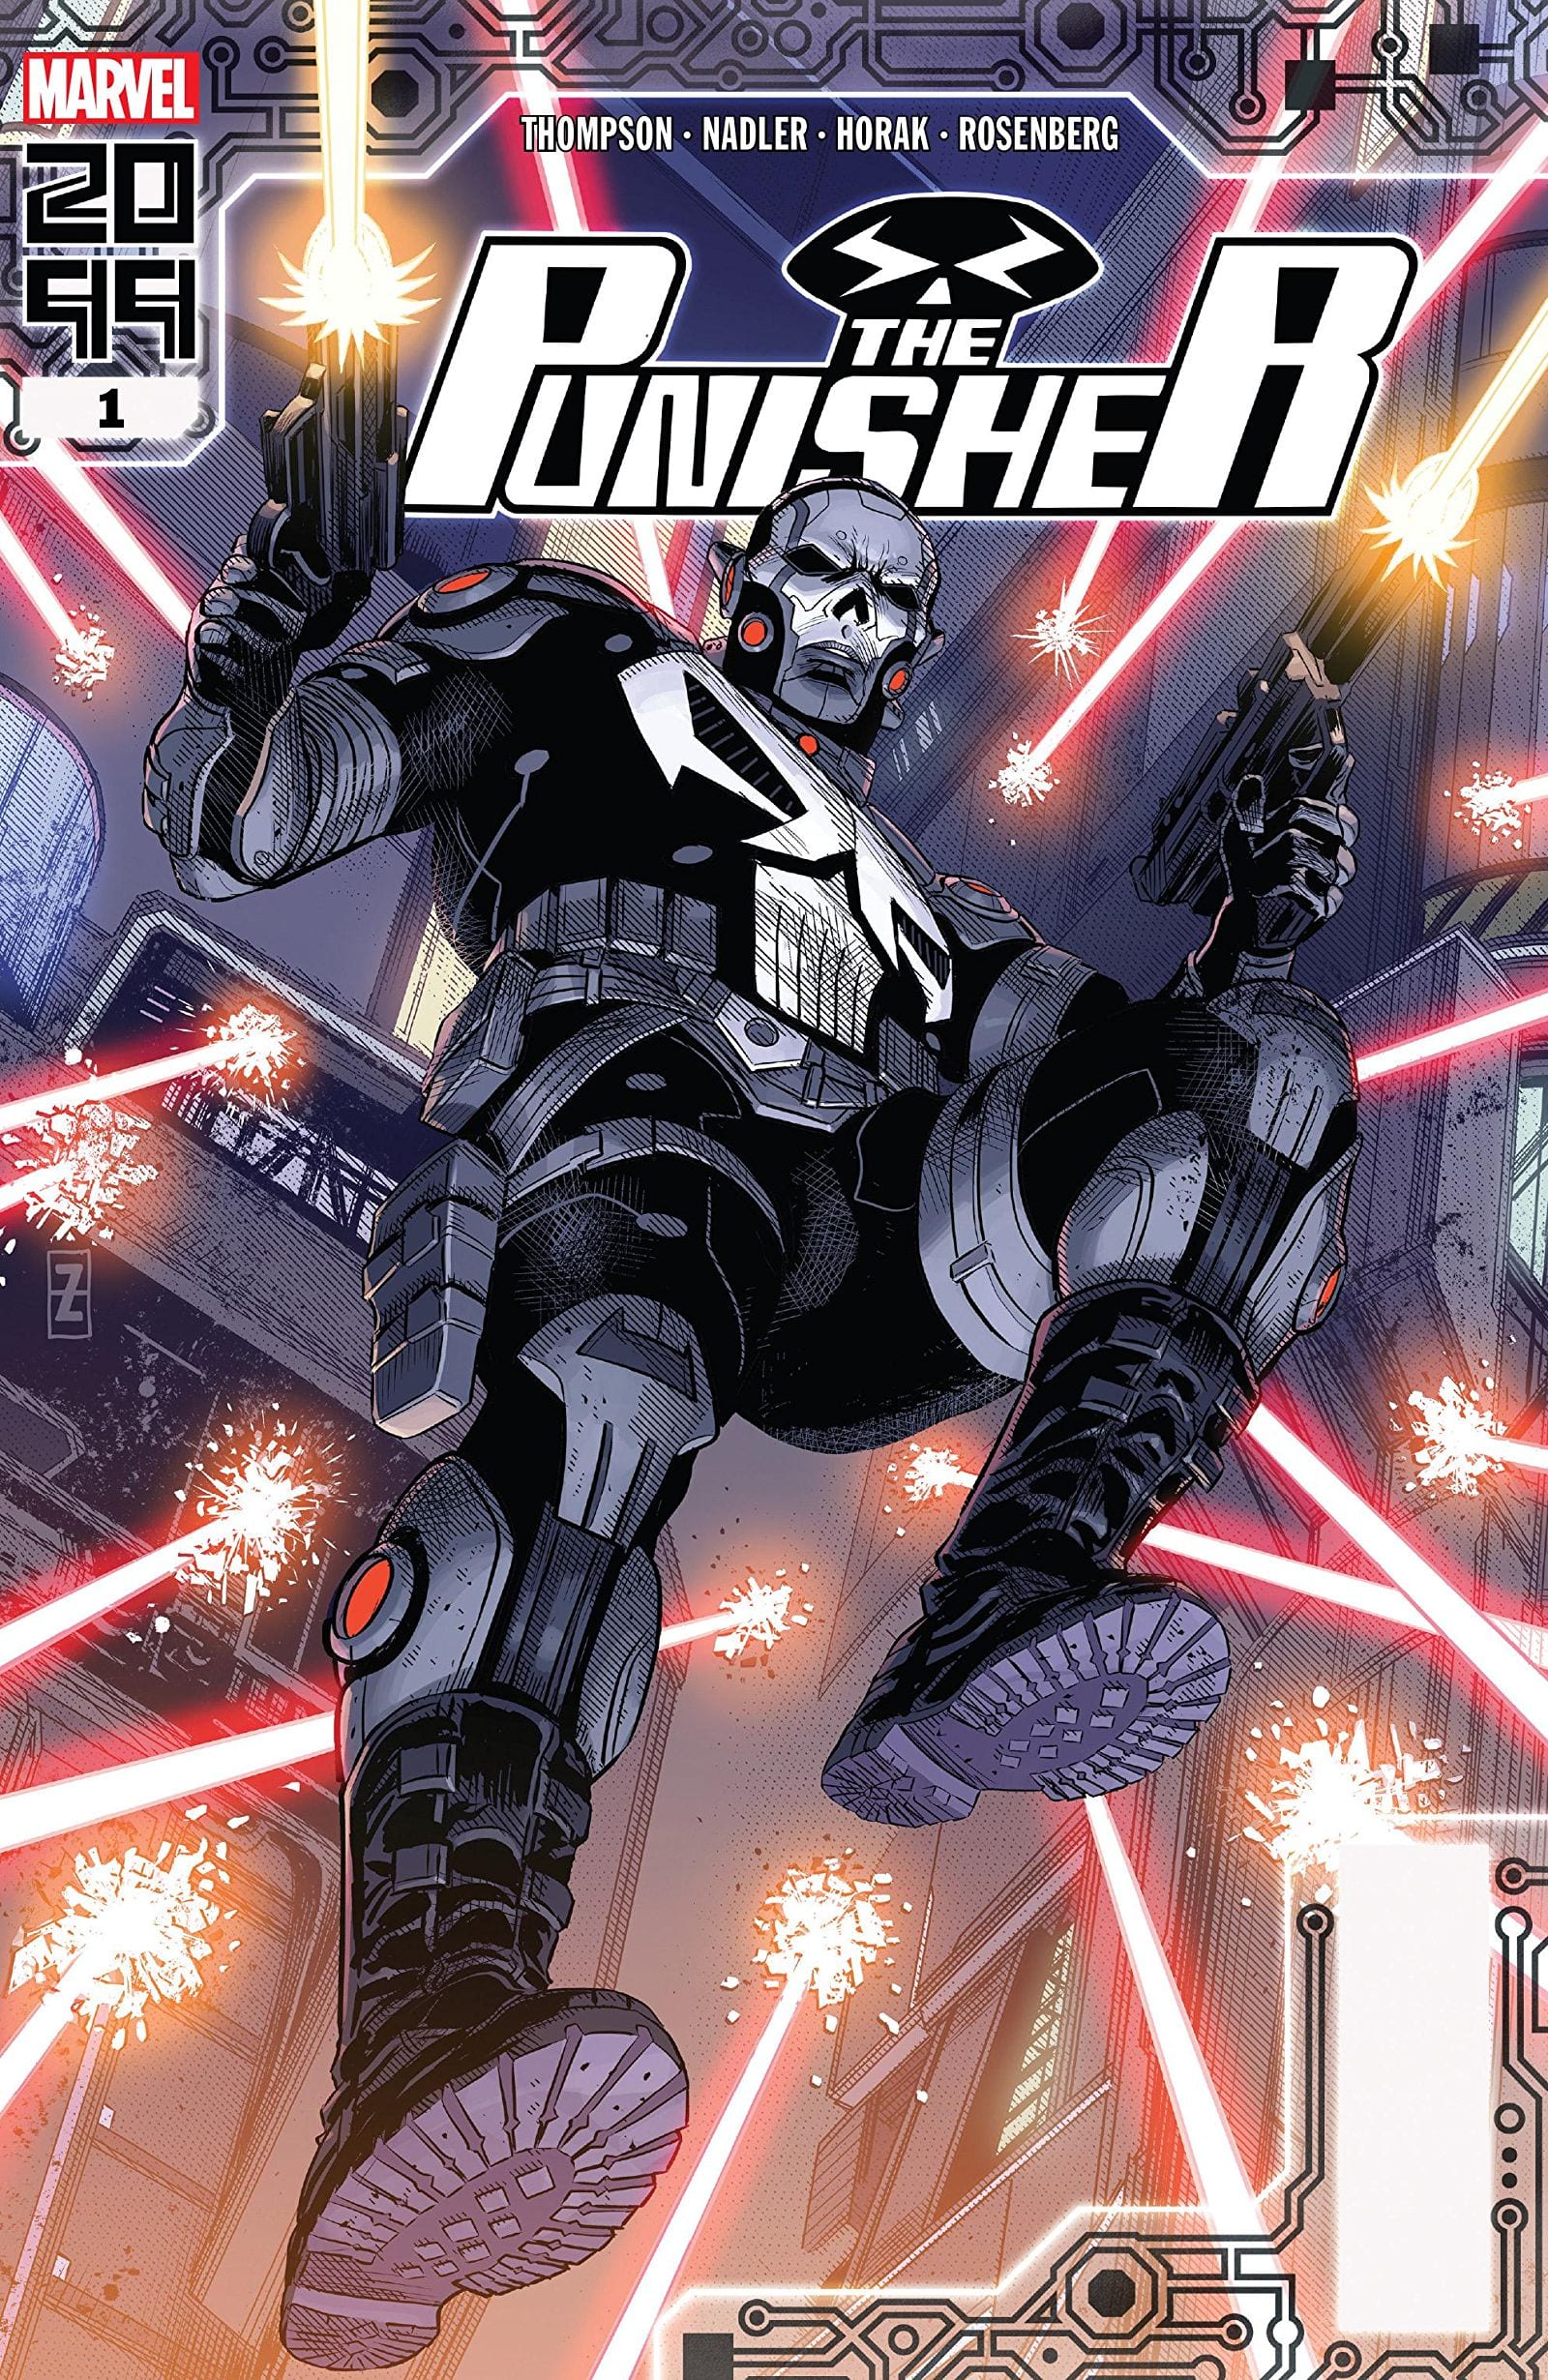 Comic completo The Punisher 2099 Volumen 3